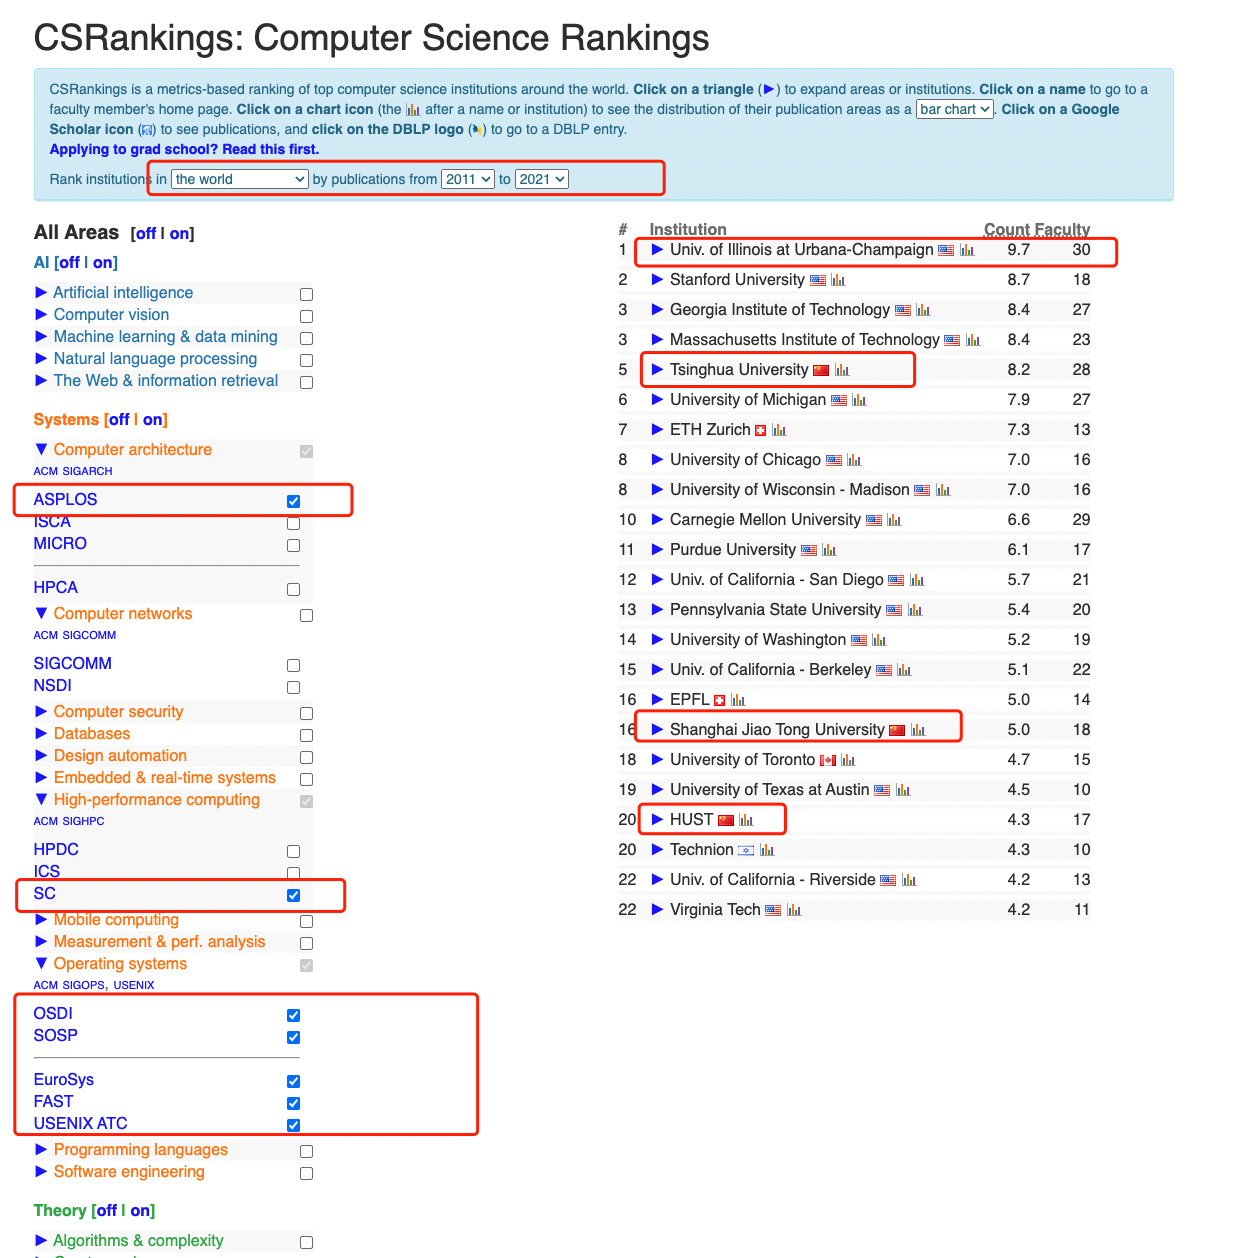 CSRankings: Computer Science Rankings